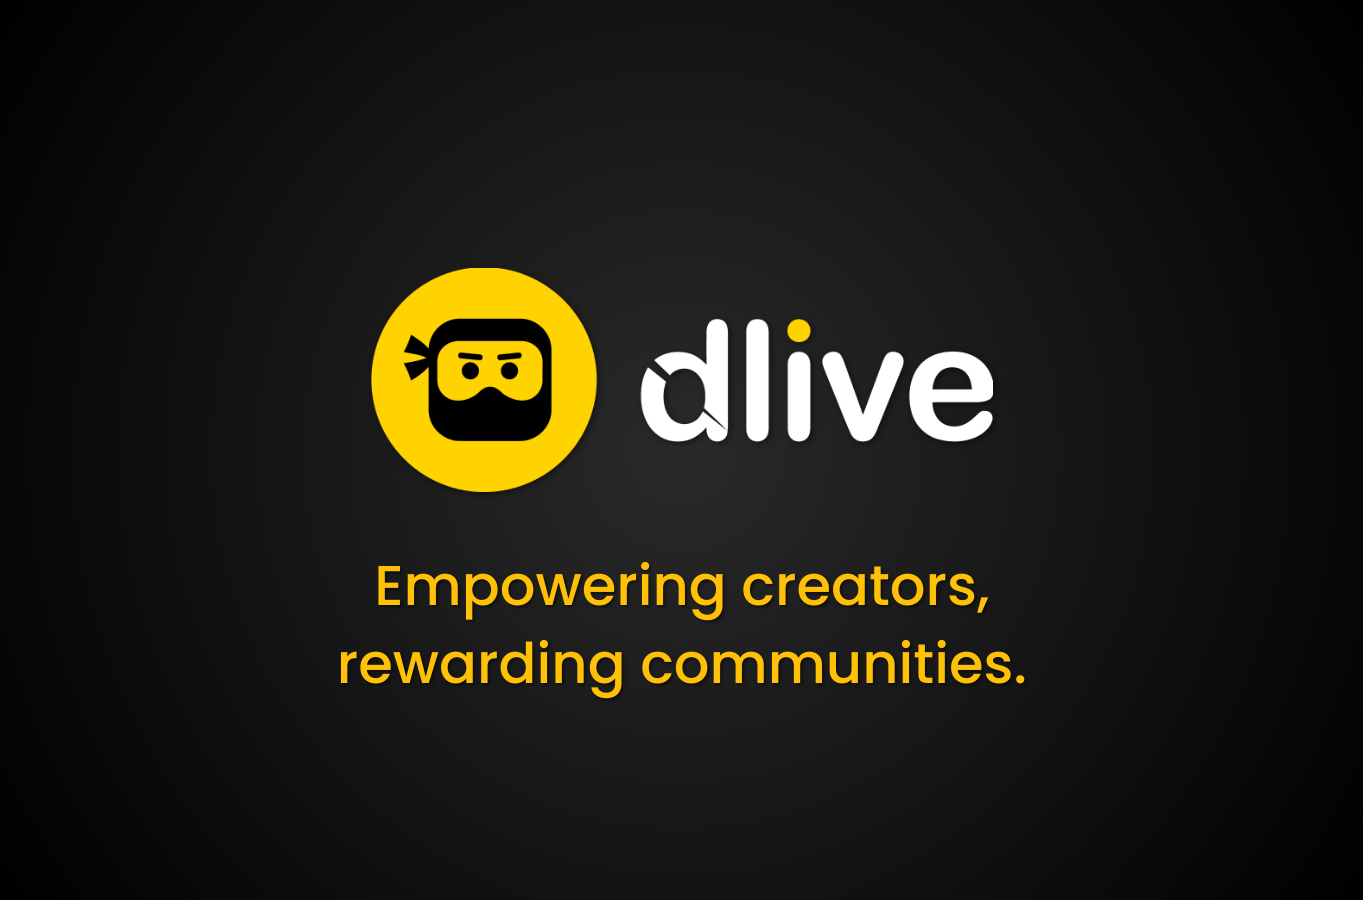 DLive empowering creators, rewarding communities